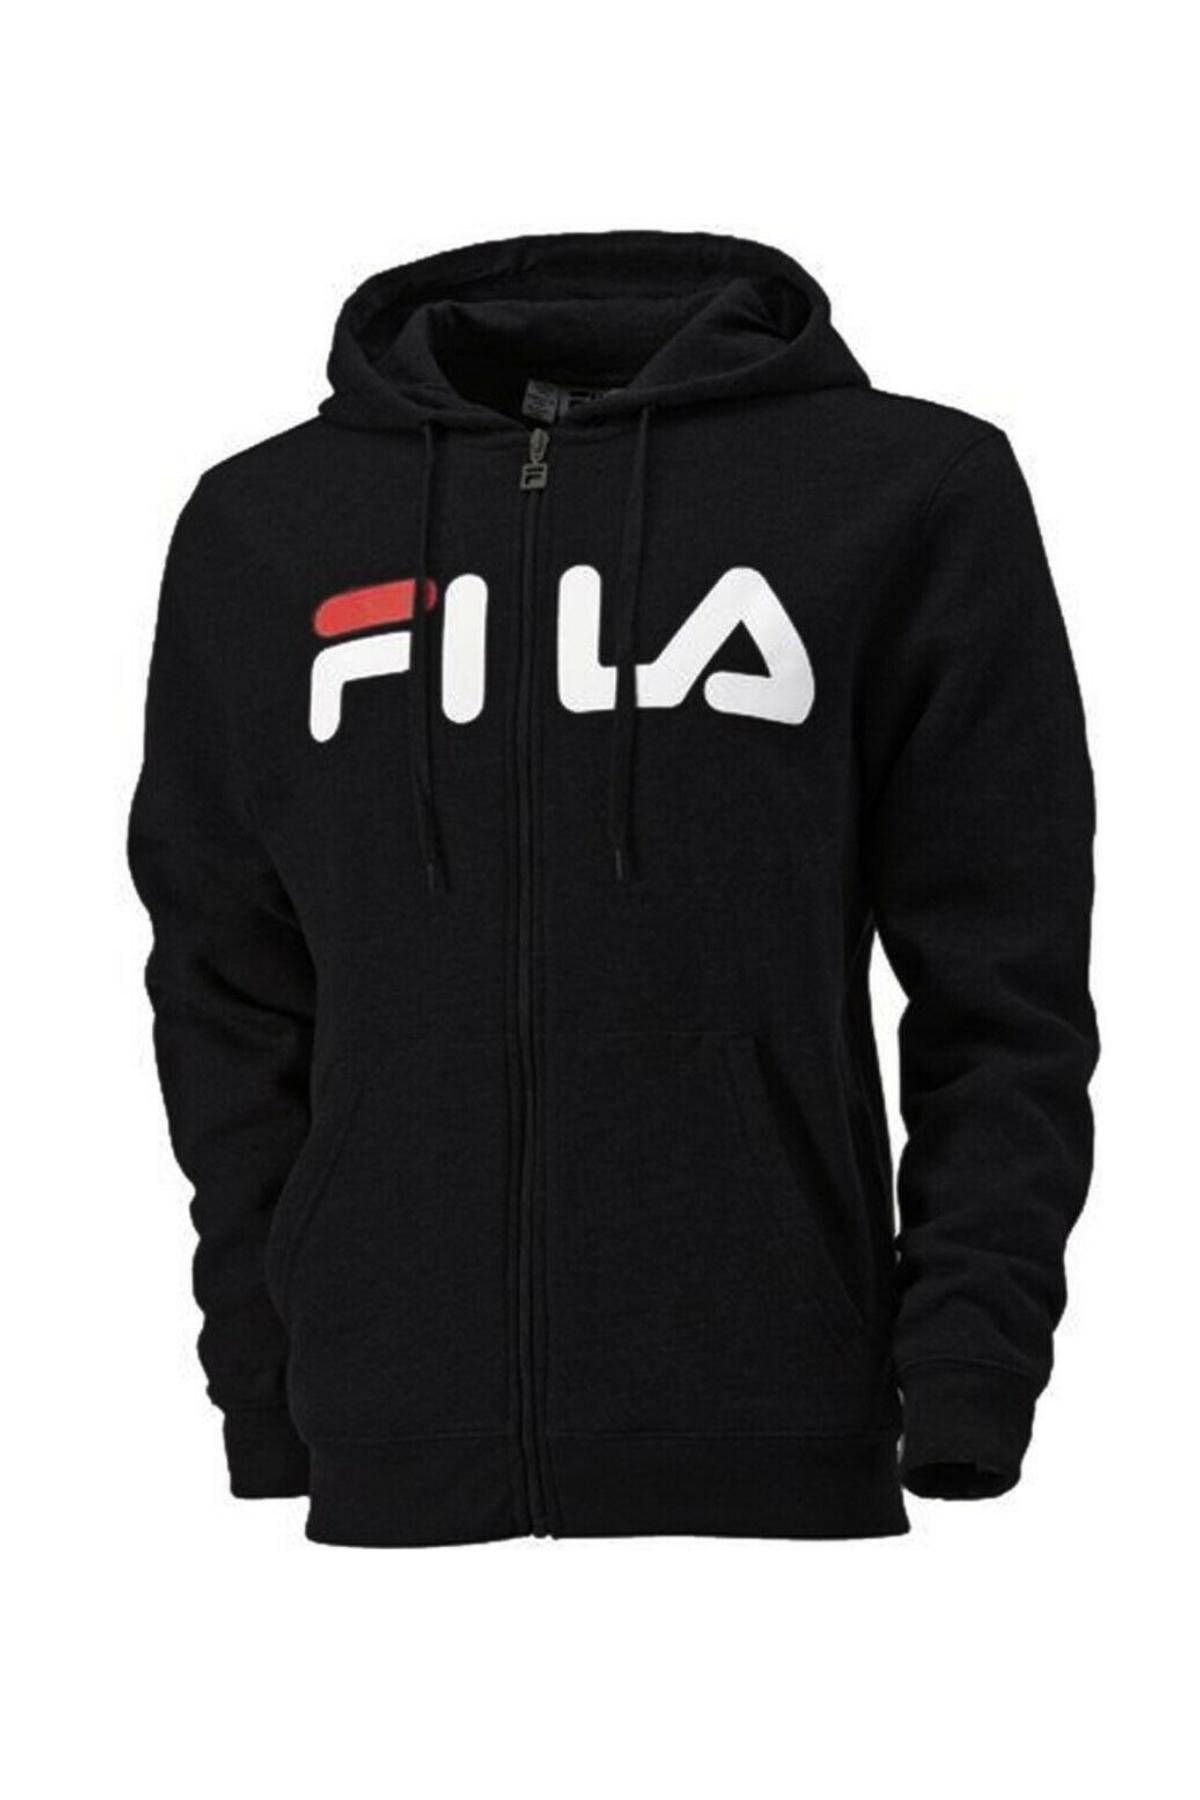 Fila Black Logo Classic Full Zip Hoodie